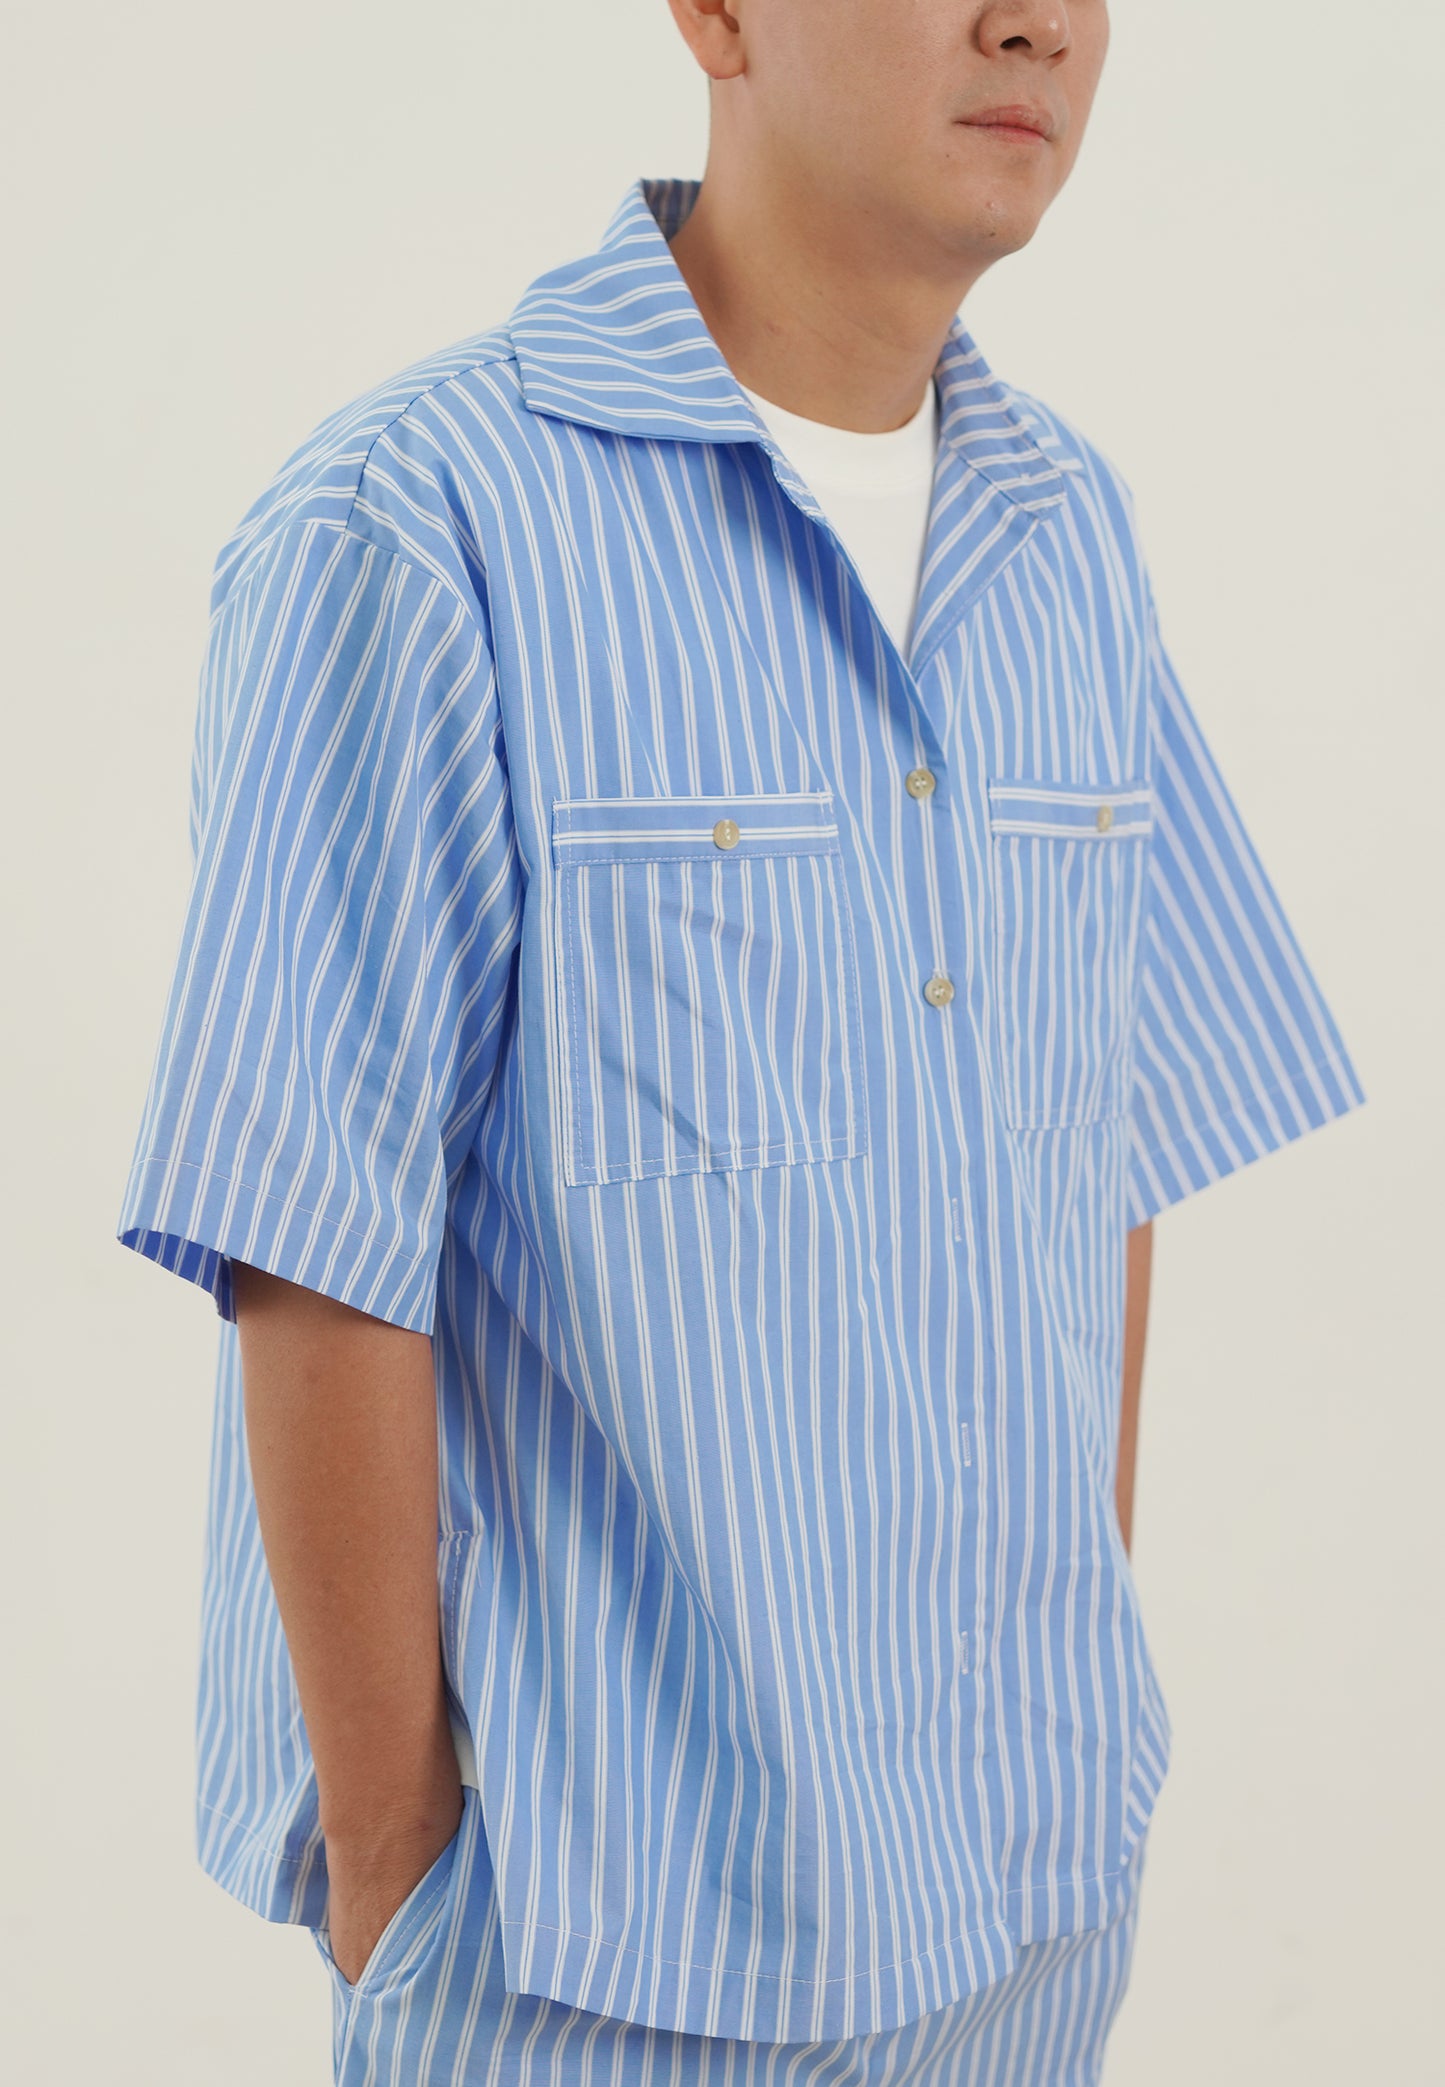 Snuggle Collar Striped Shirt dark blue